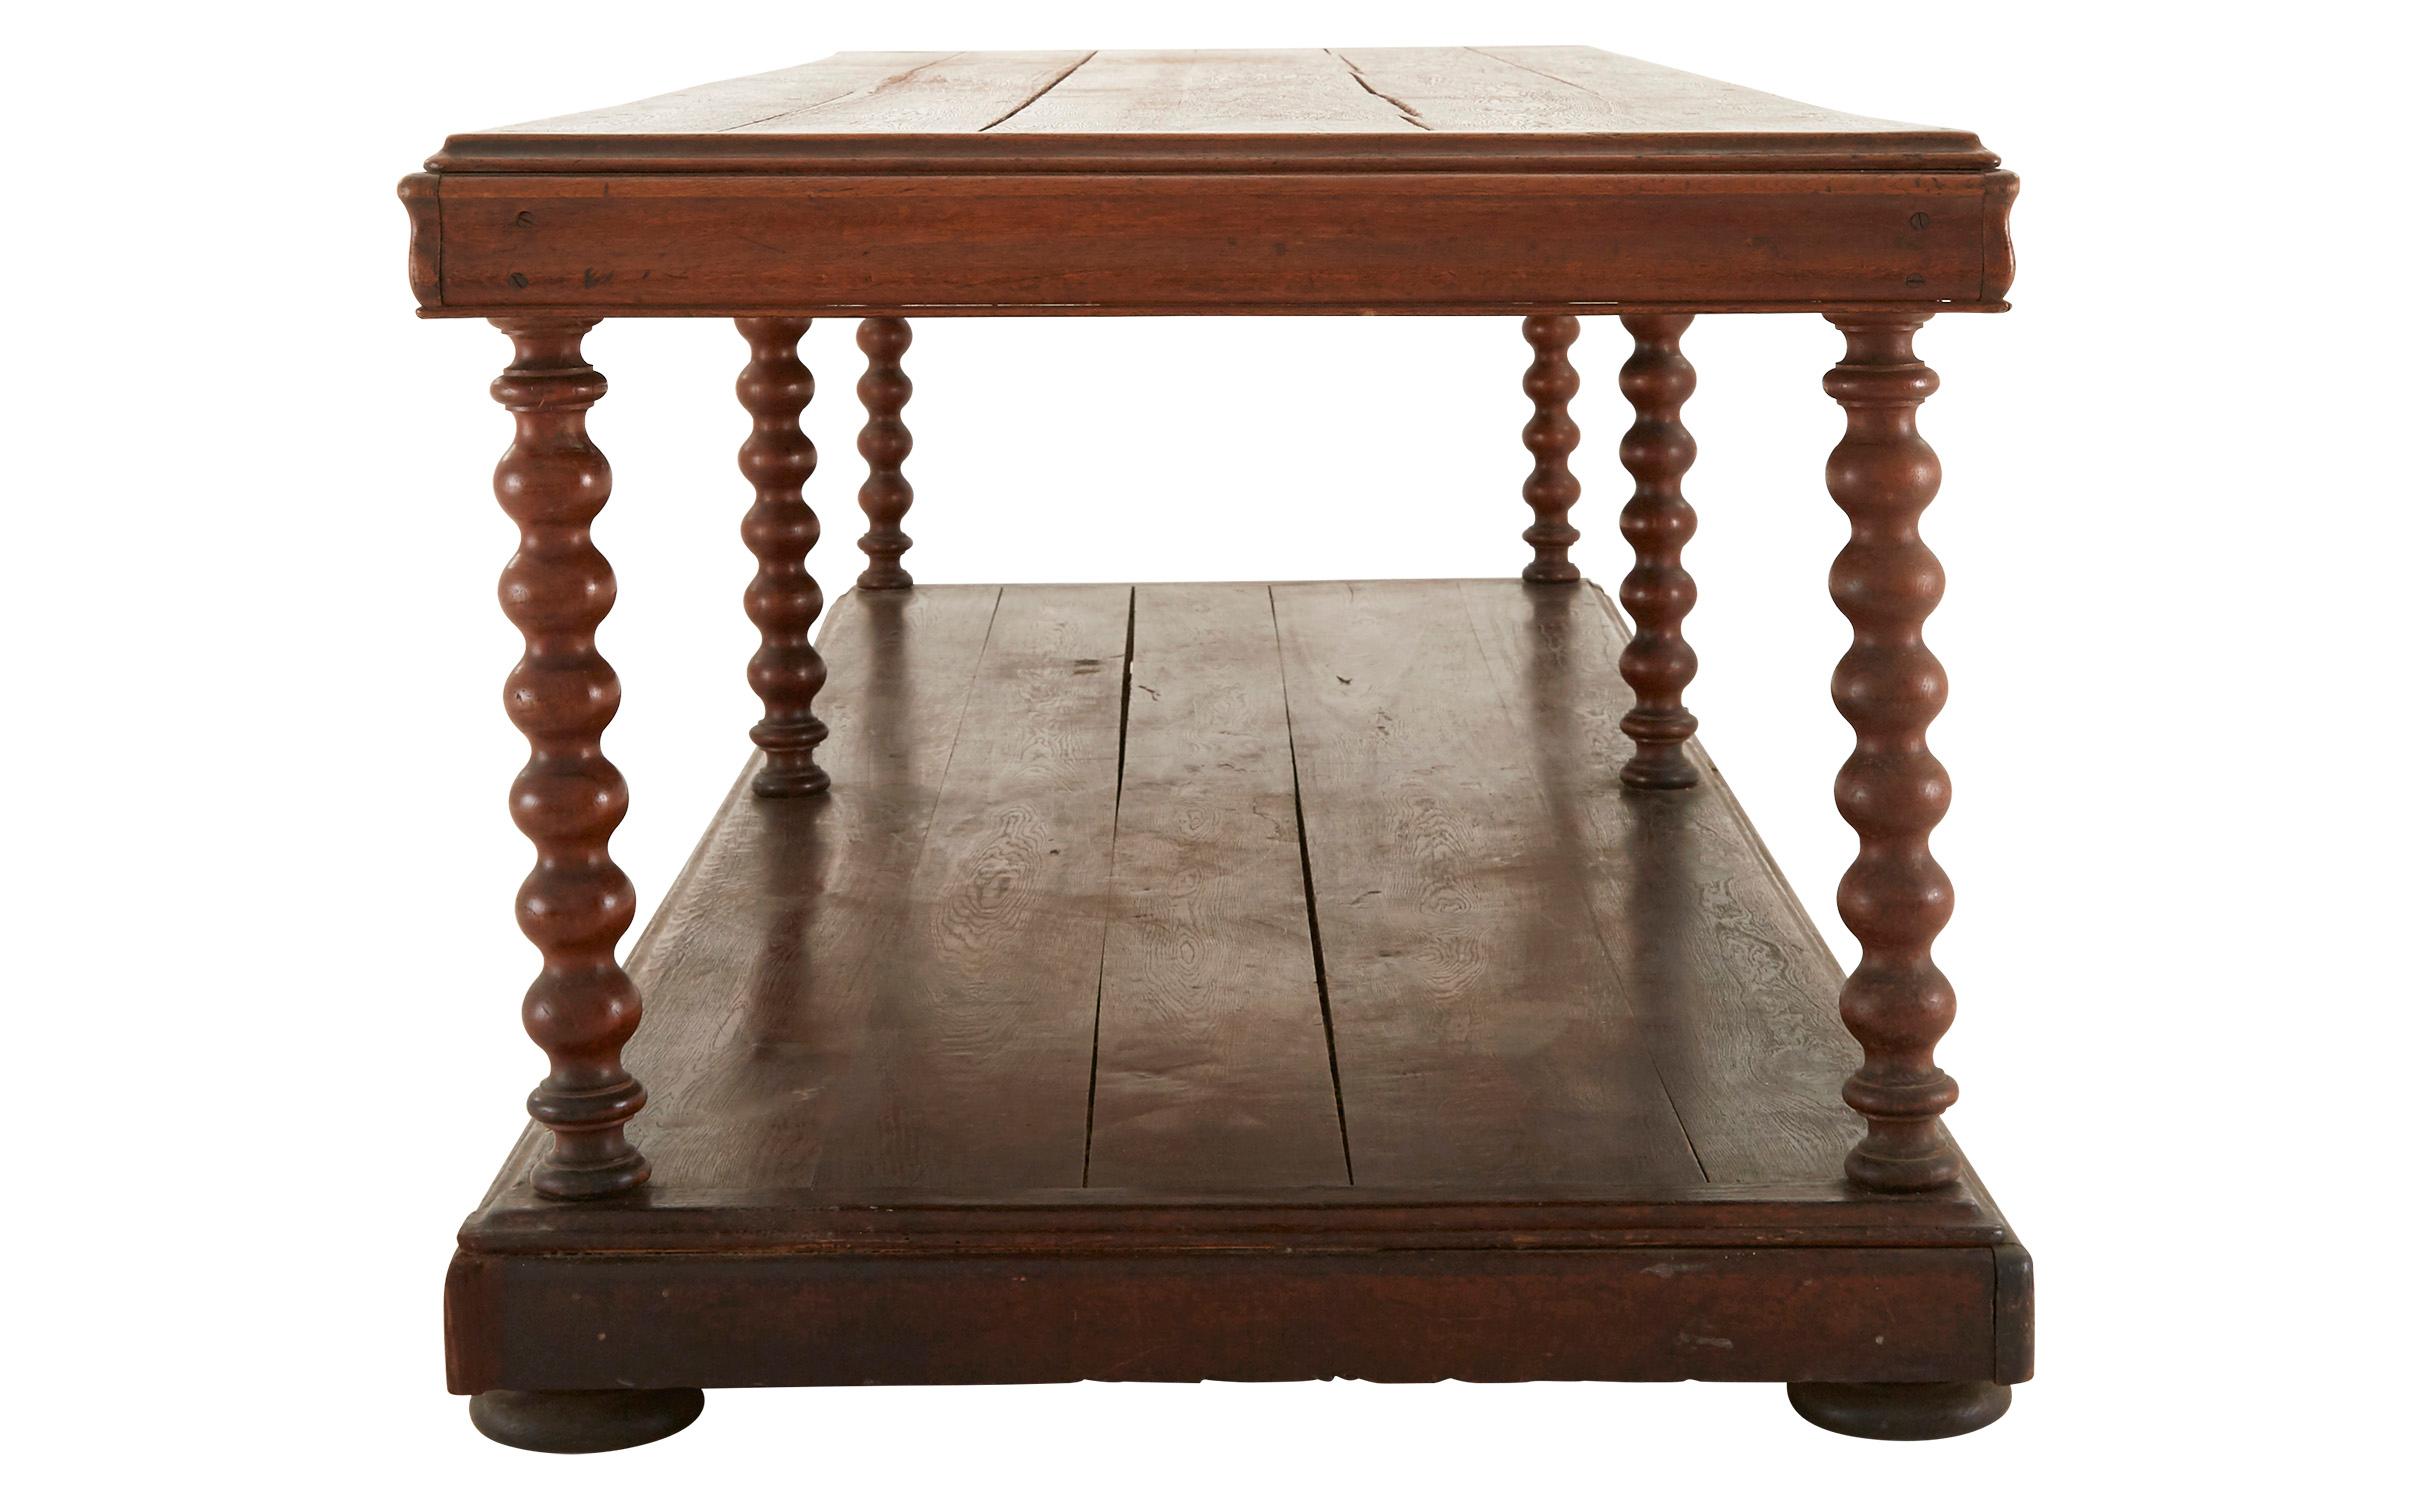 Late 19th Century French Draper's Table (Viktorianisch)